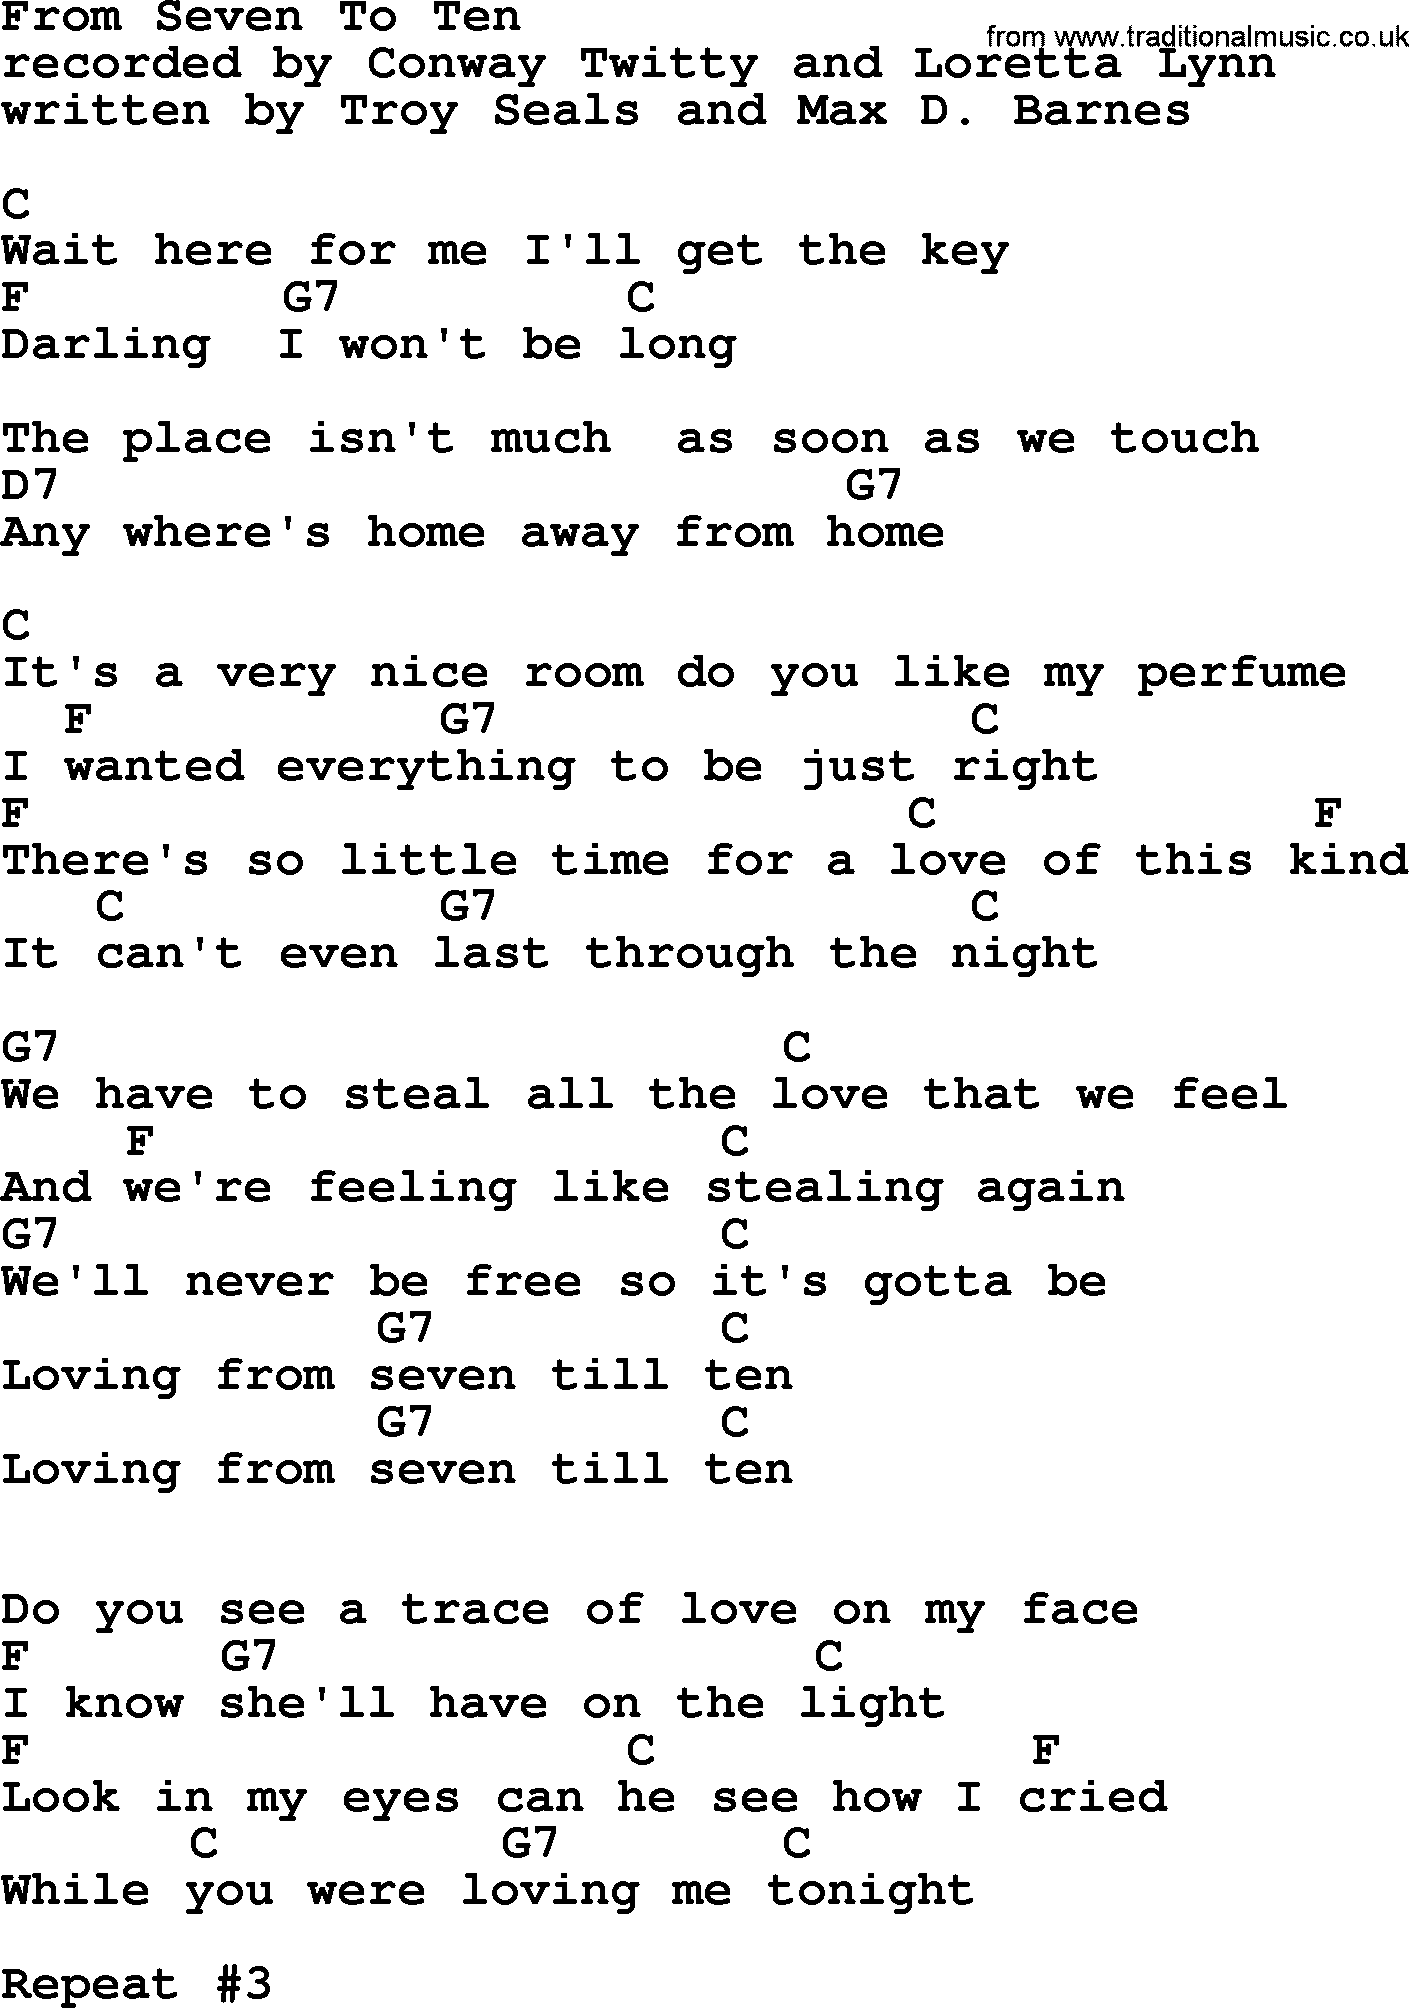 Loretta Lynn song: From Seven To Ten lyrics and chords